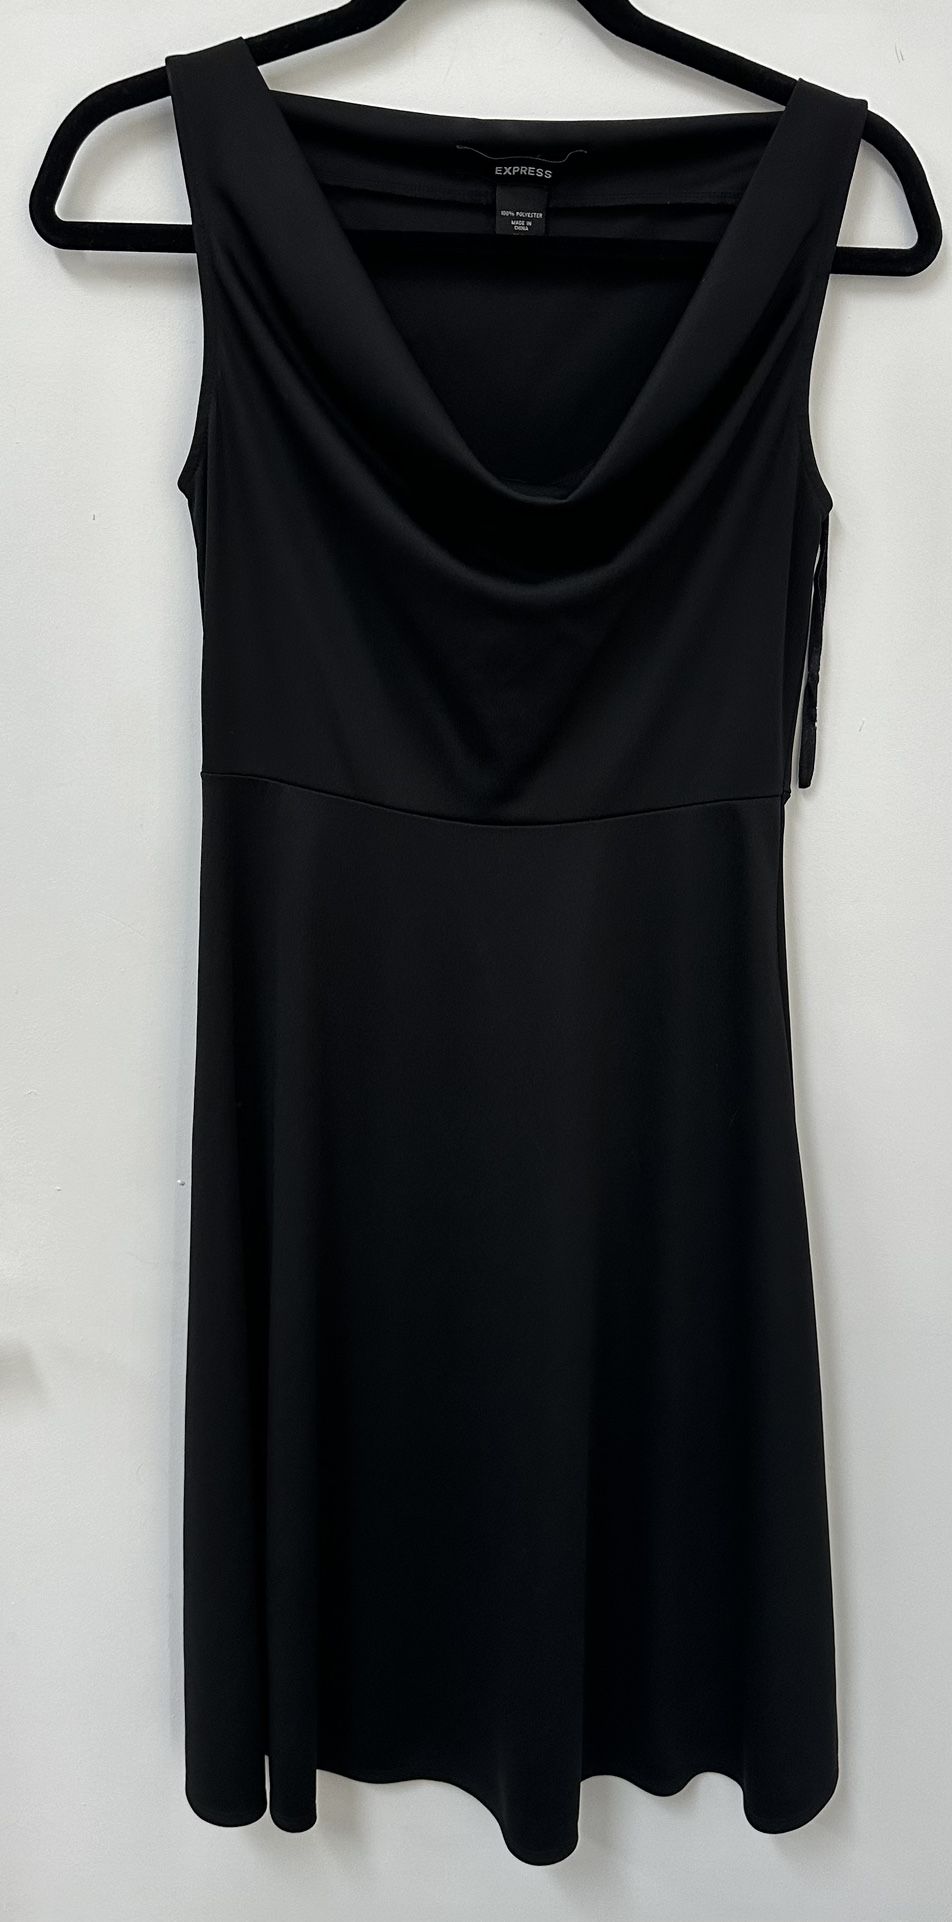 Express Black Dress Size 5/6